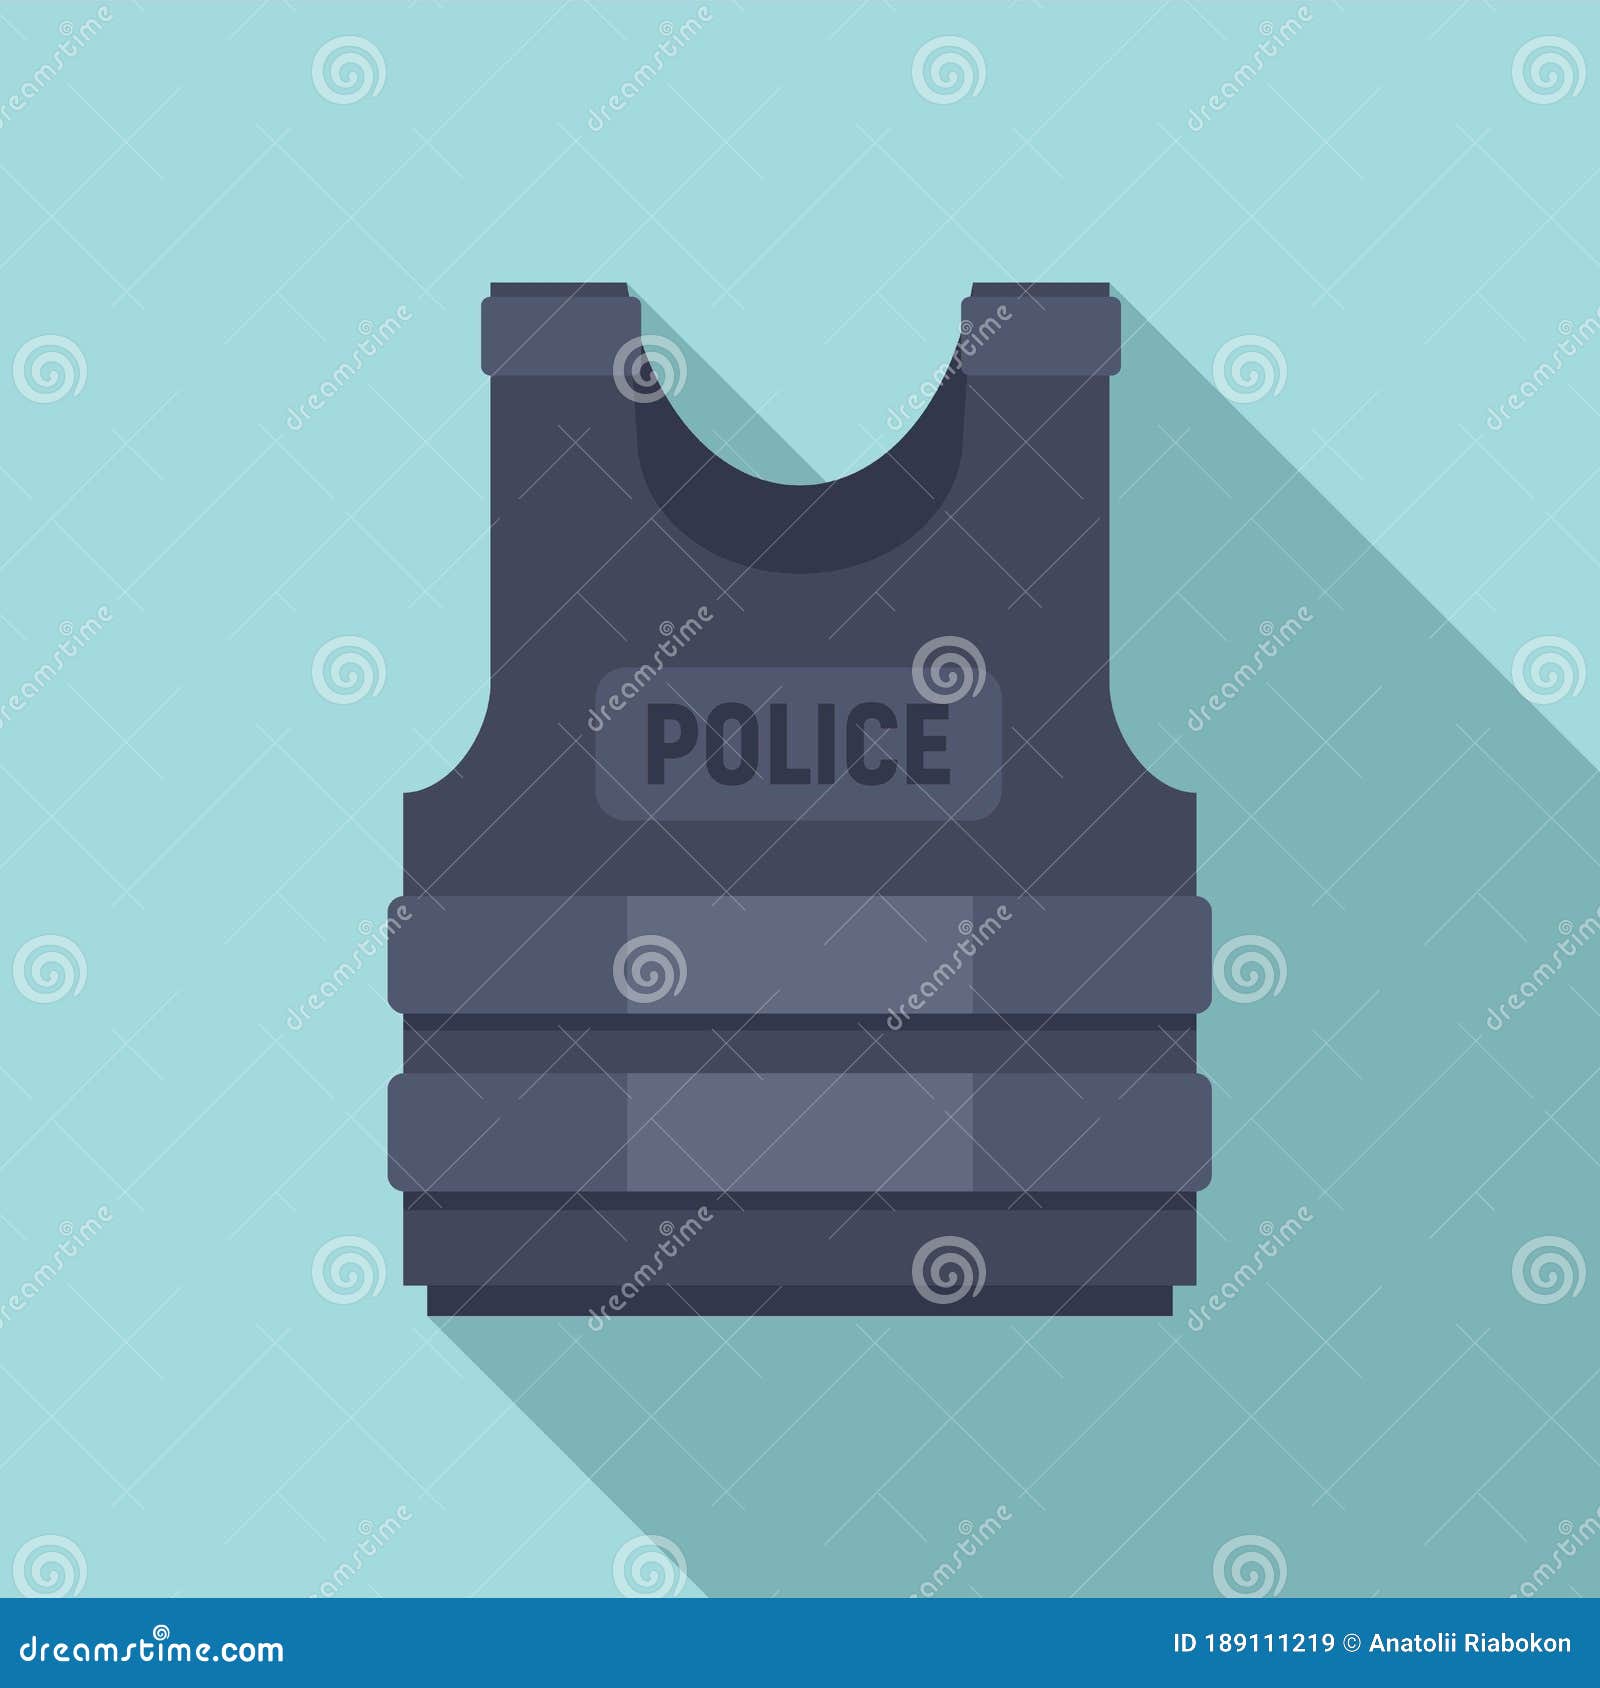 police bulletproof vest icon, flat style